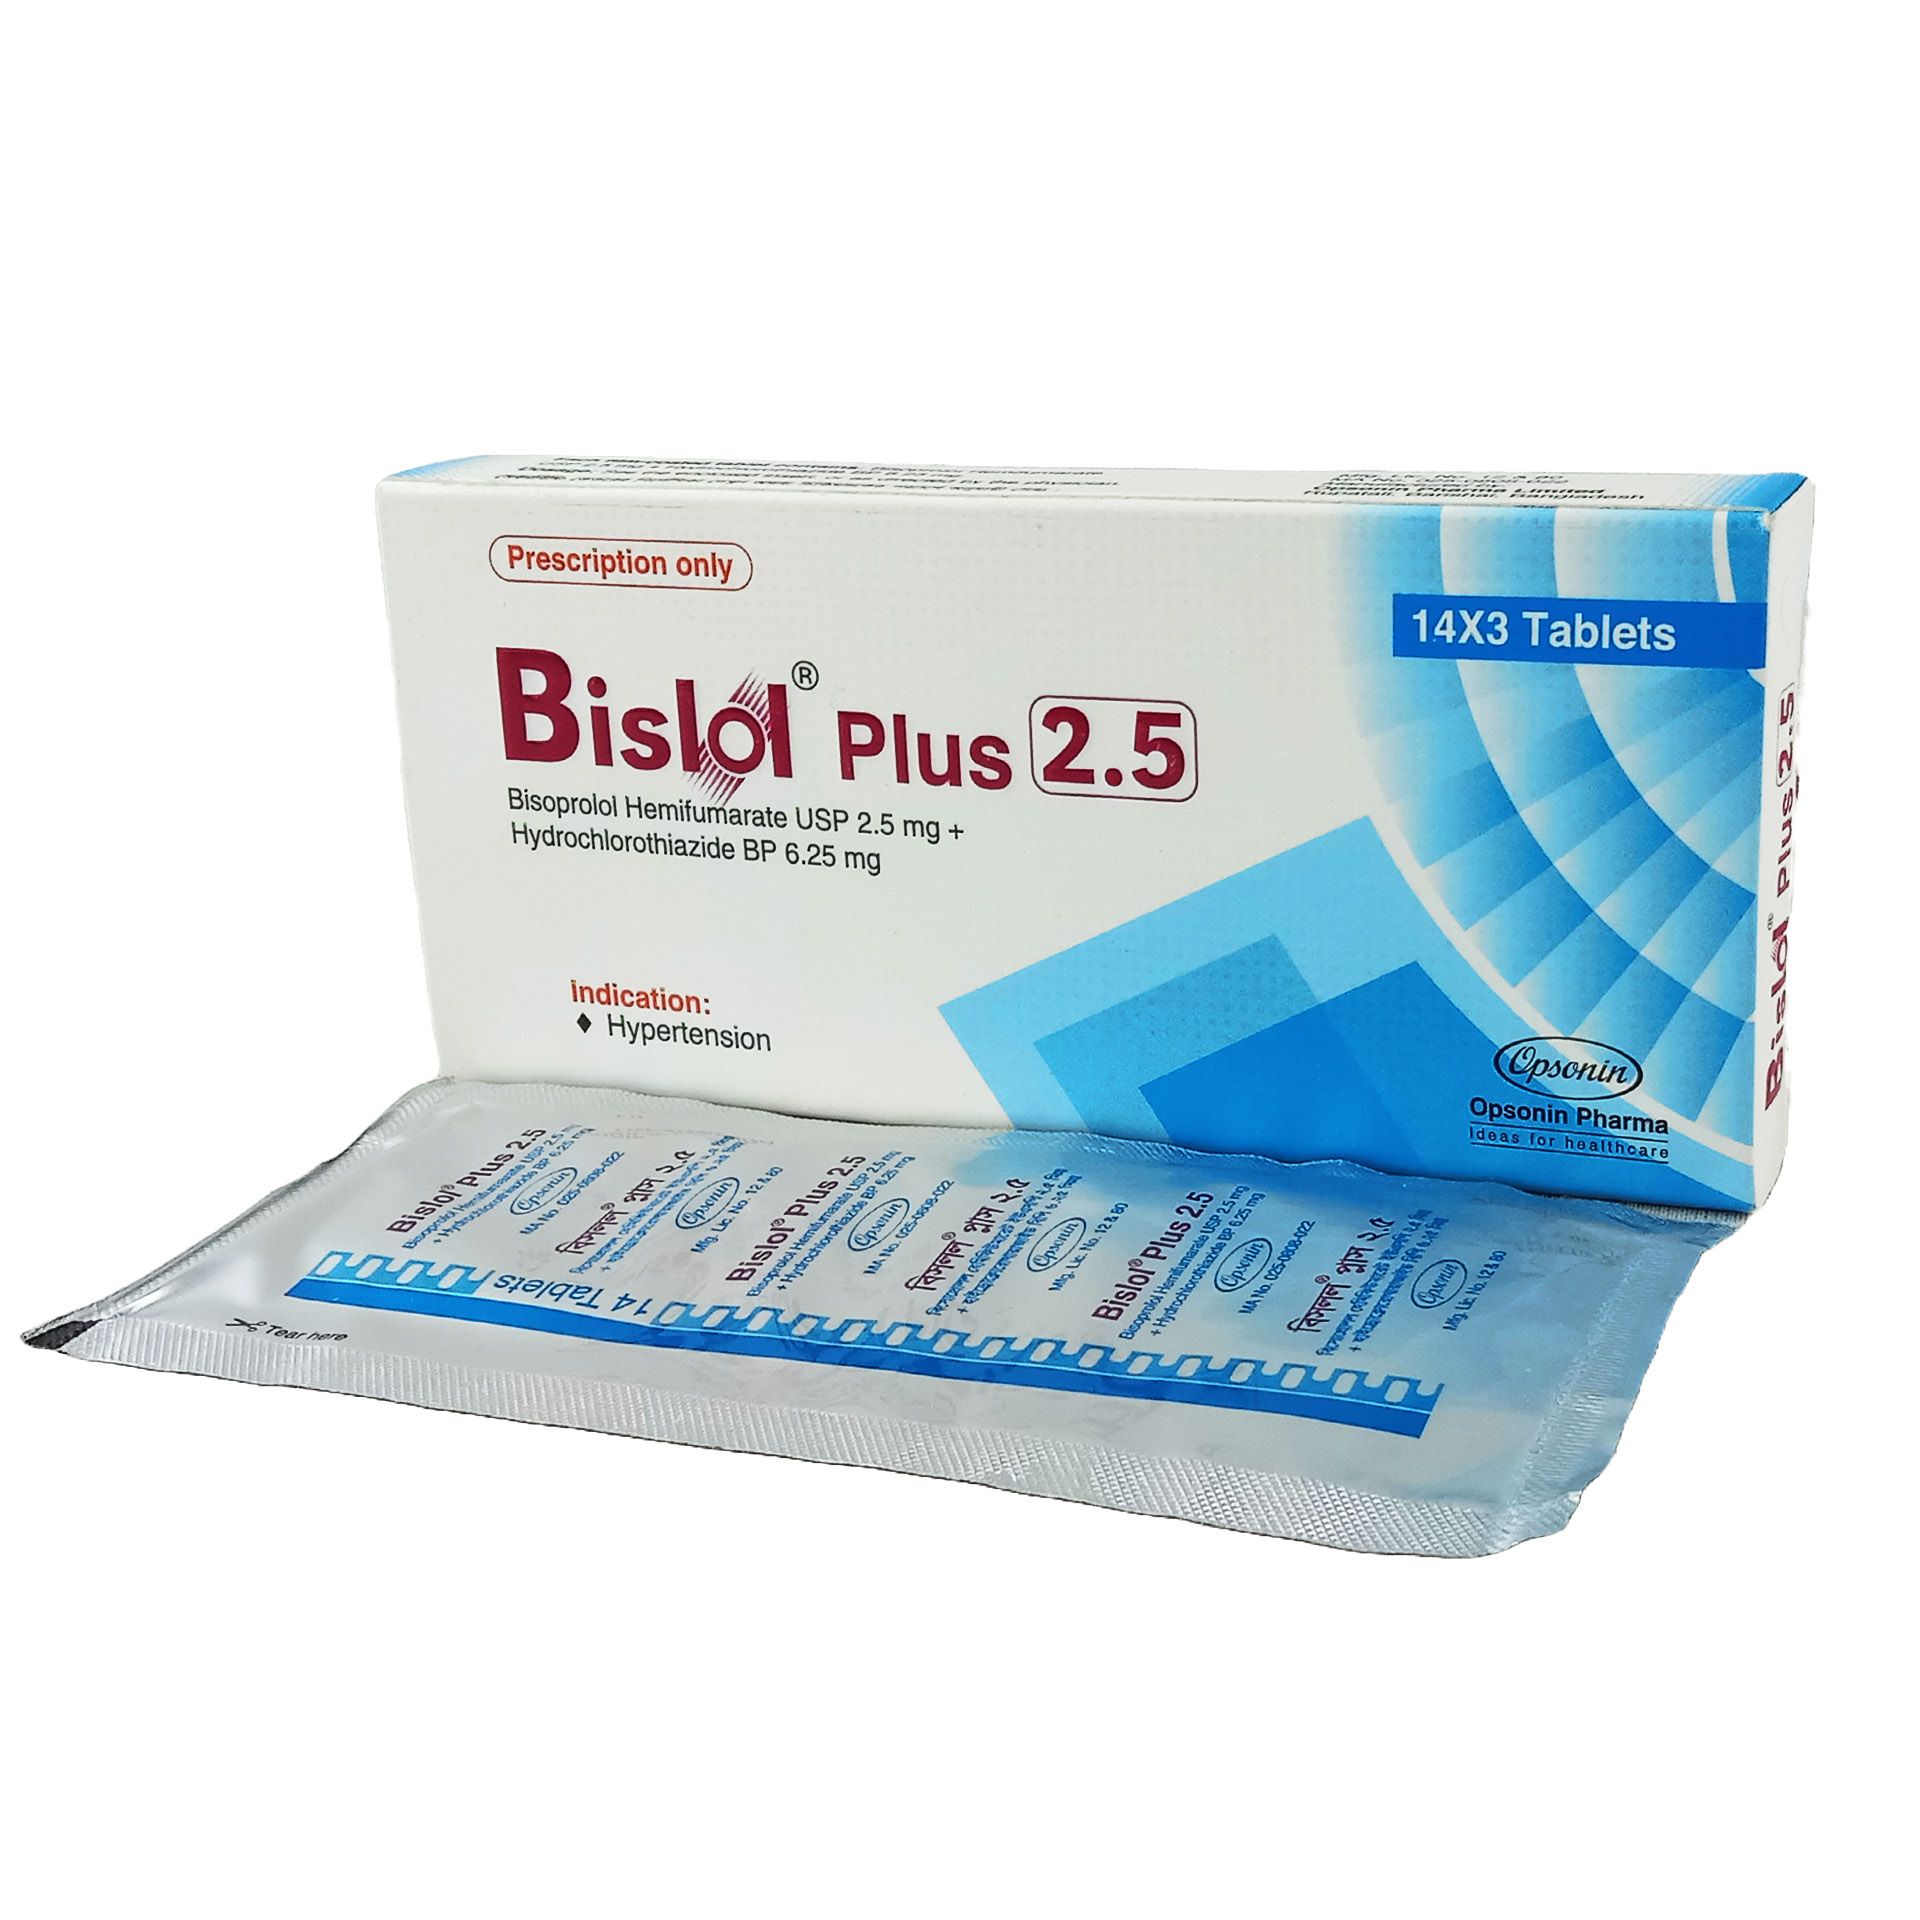 Bislol Plus 2.5 2.5mg+6.25mg Tablet